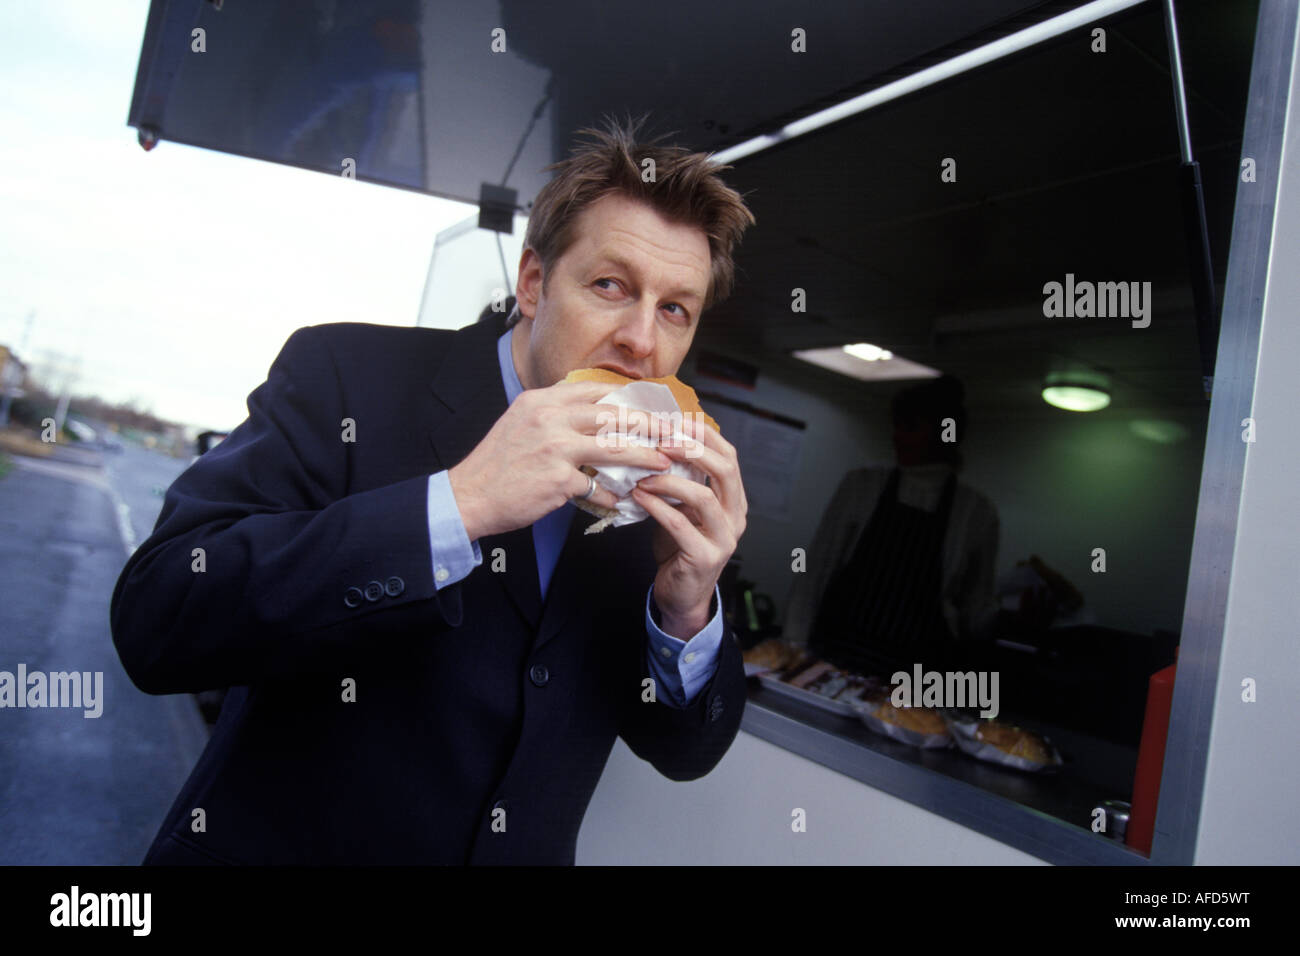 man eating a hamburger on the move Stock Photo